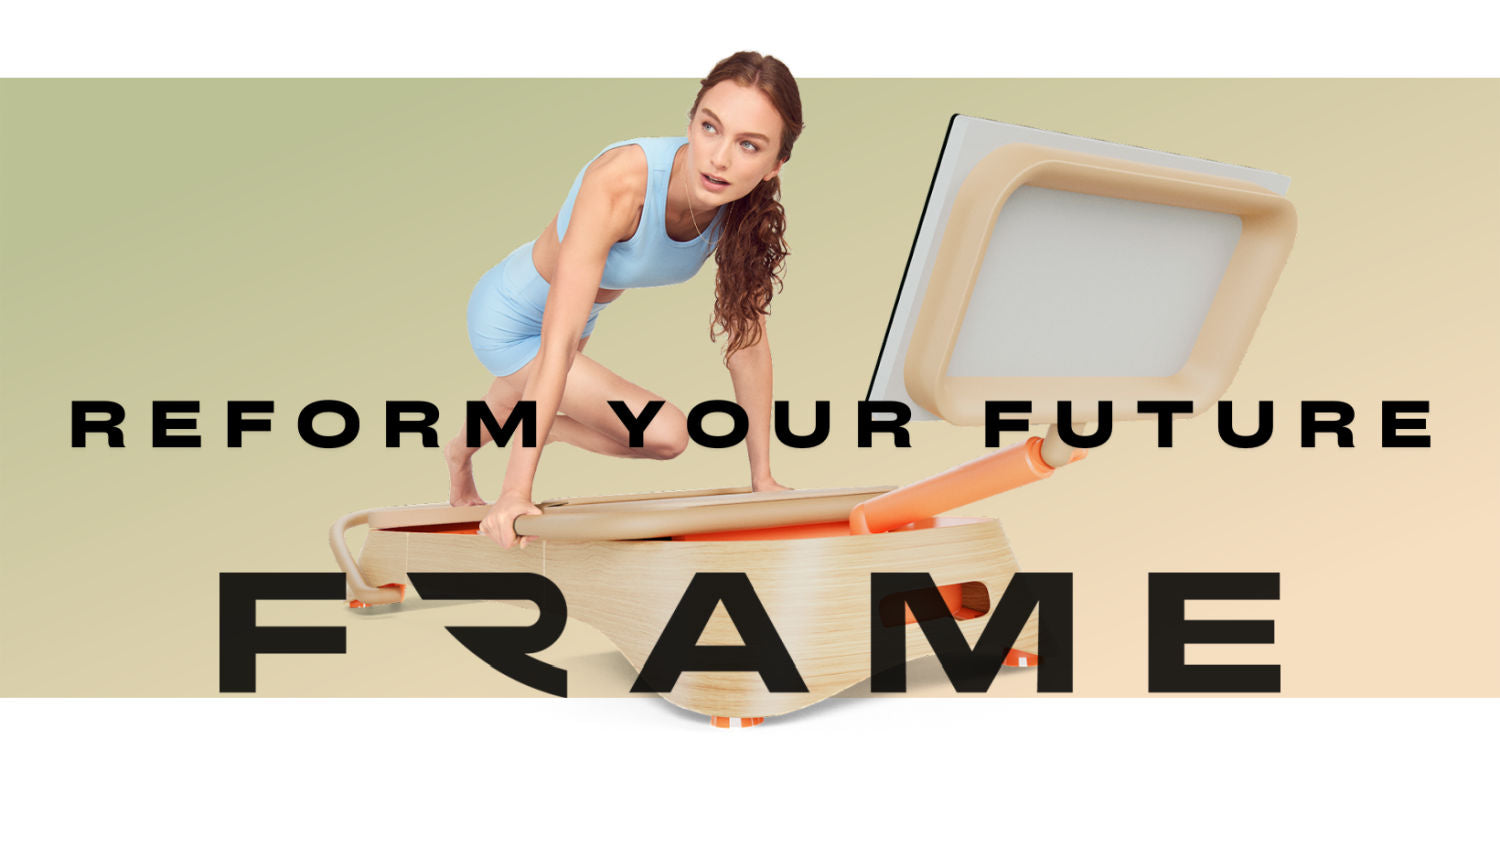 frame fitness pilates reformer banner image desktop